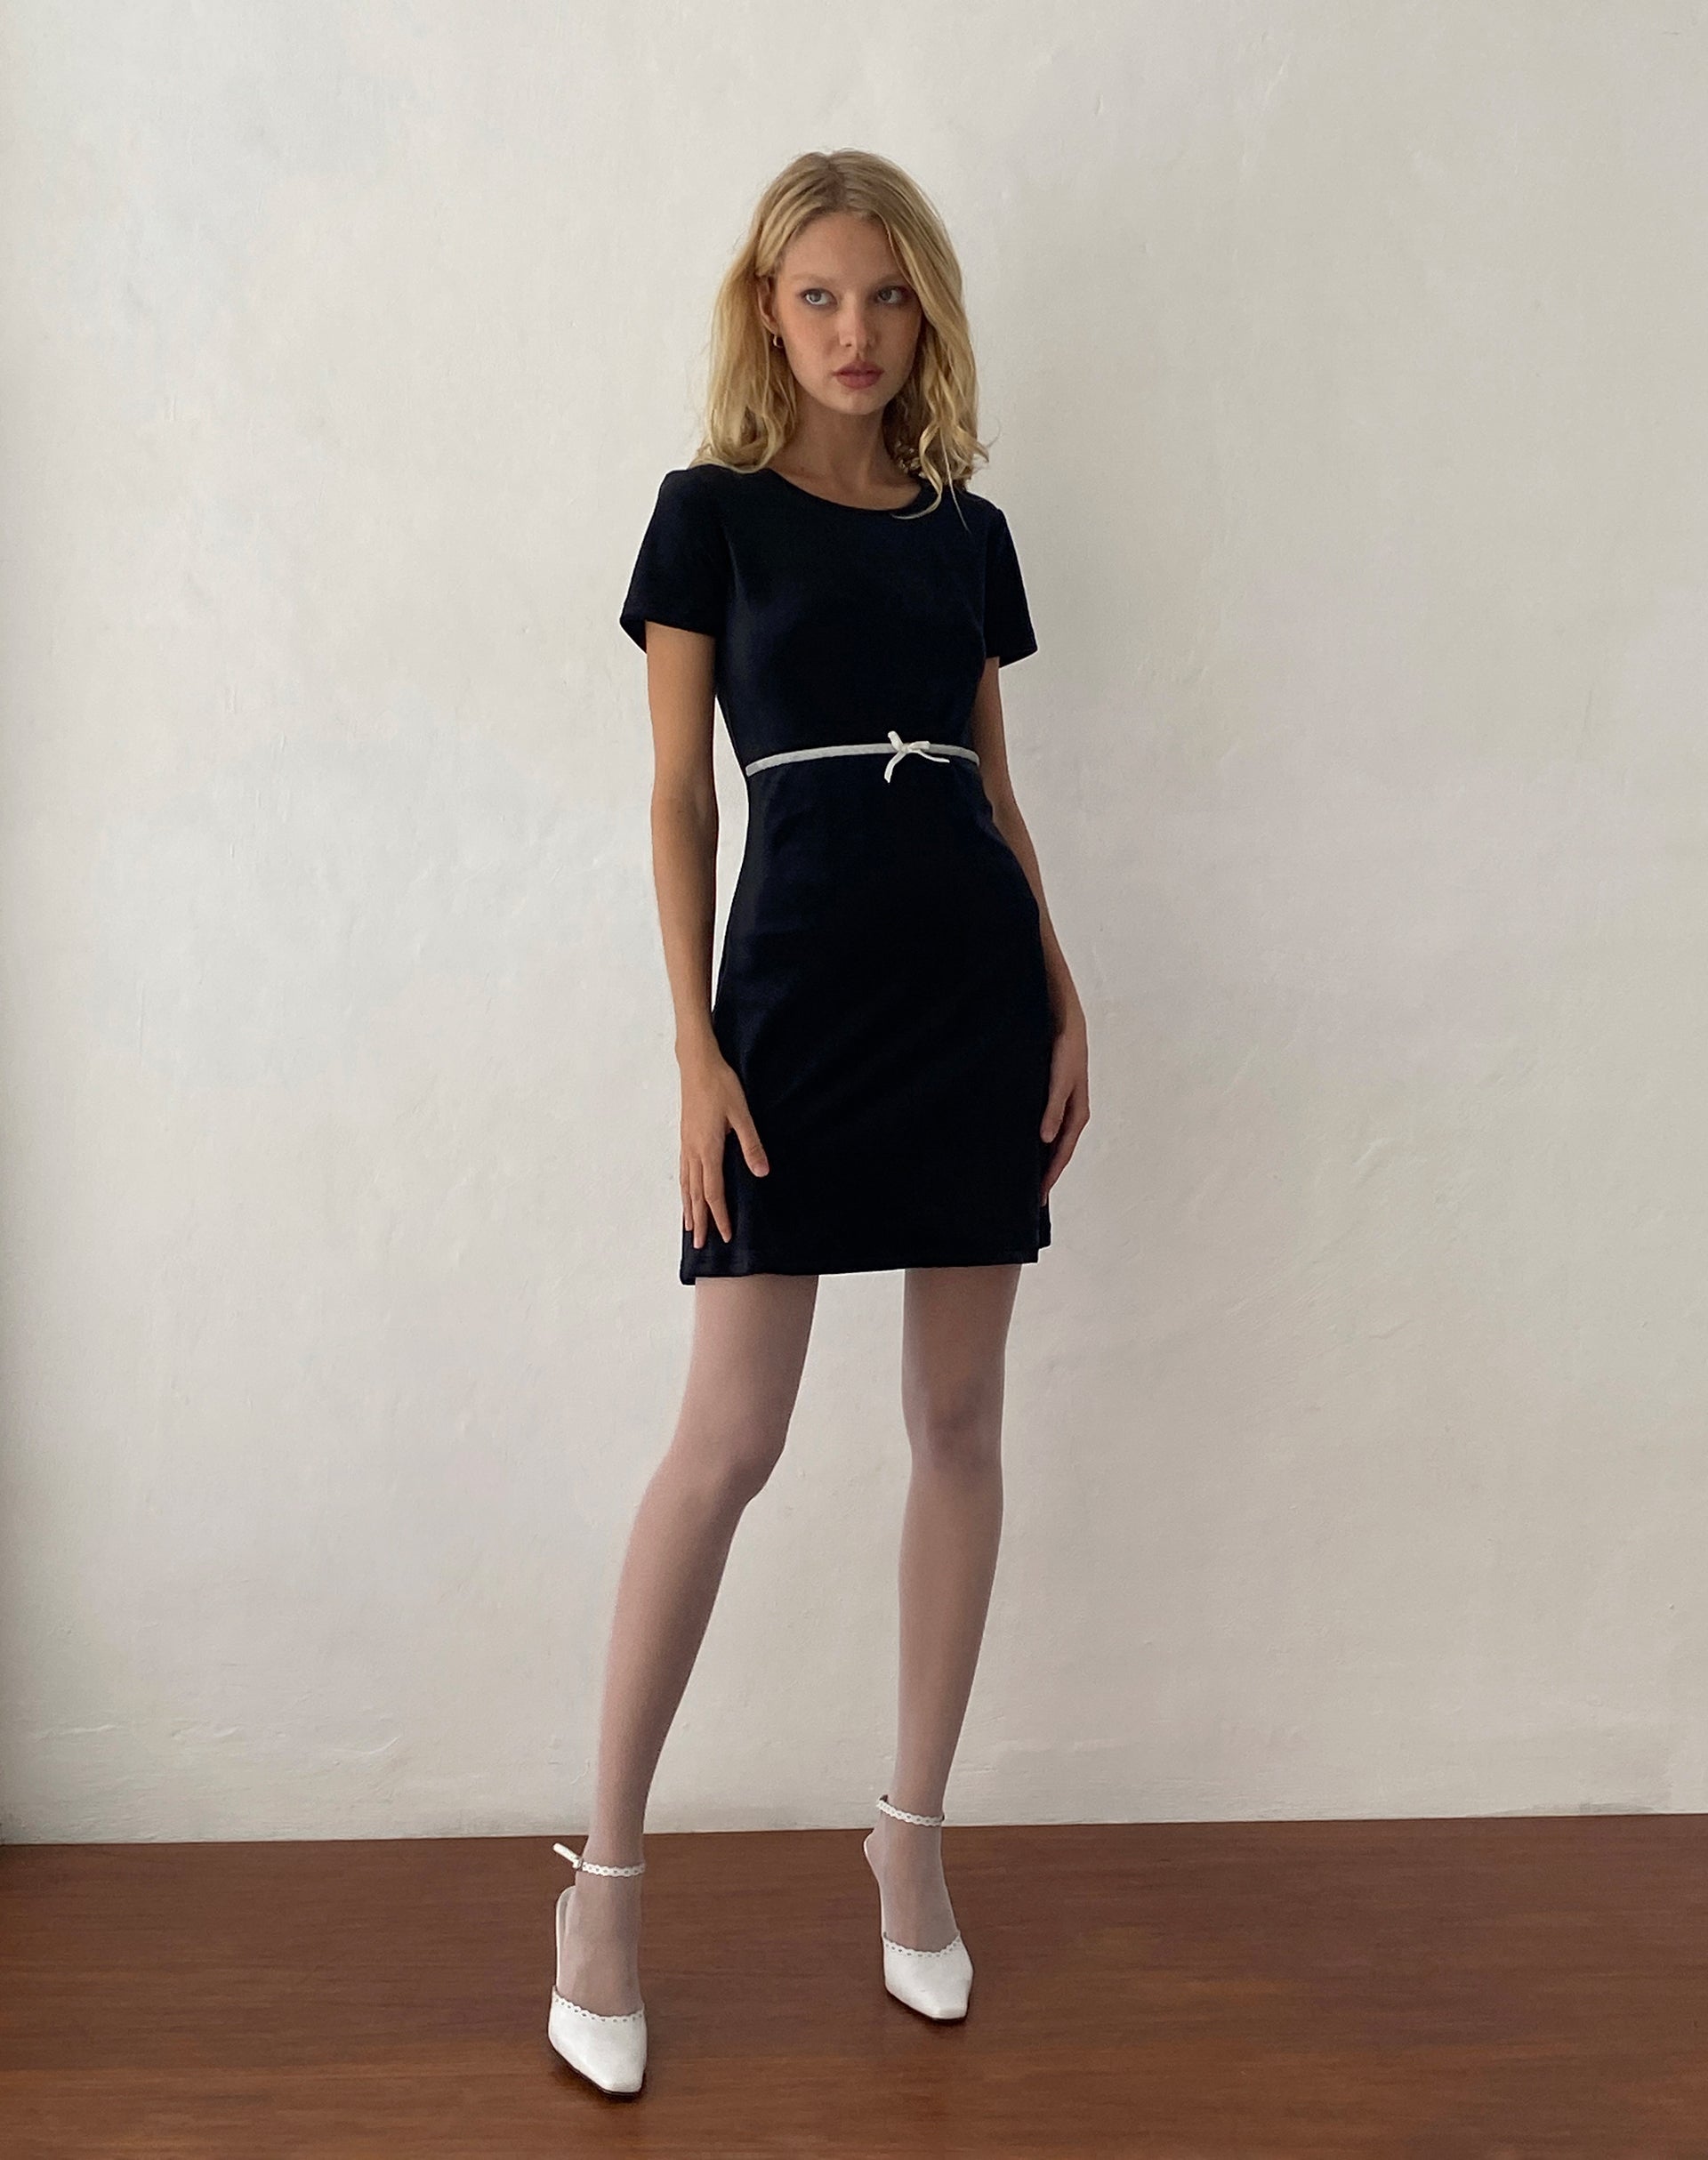 Image of Amanda Mini Dress in Black Velvet with White Trim and Bow